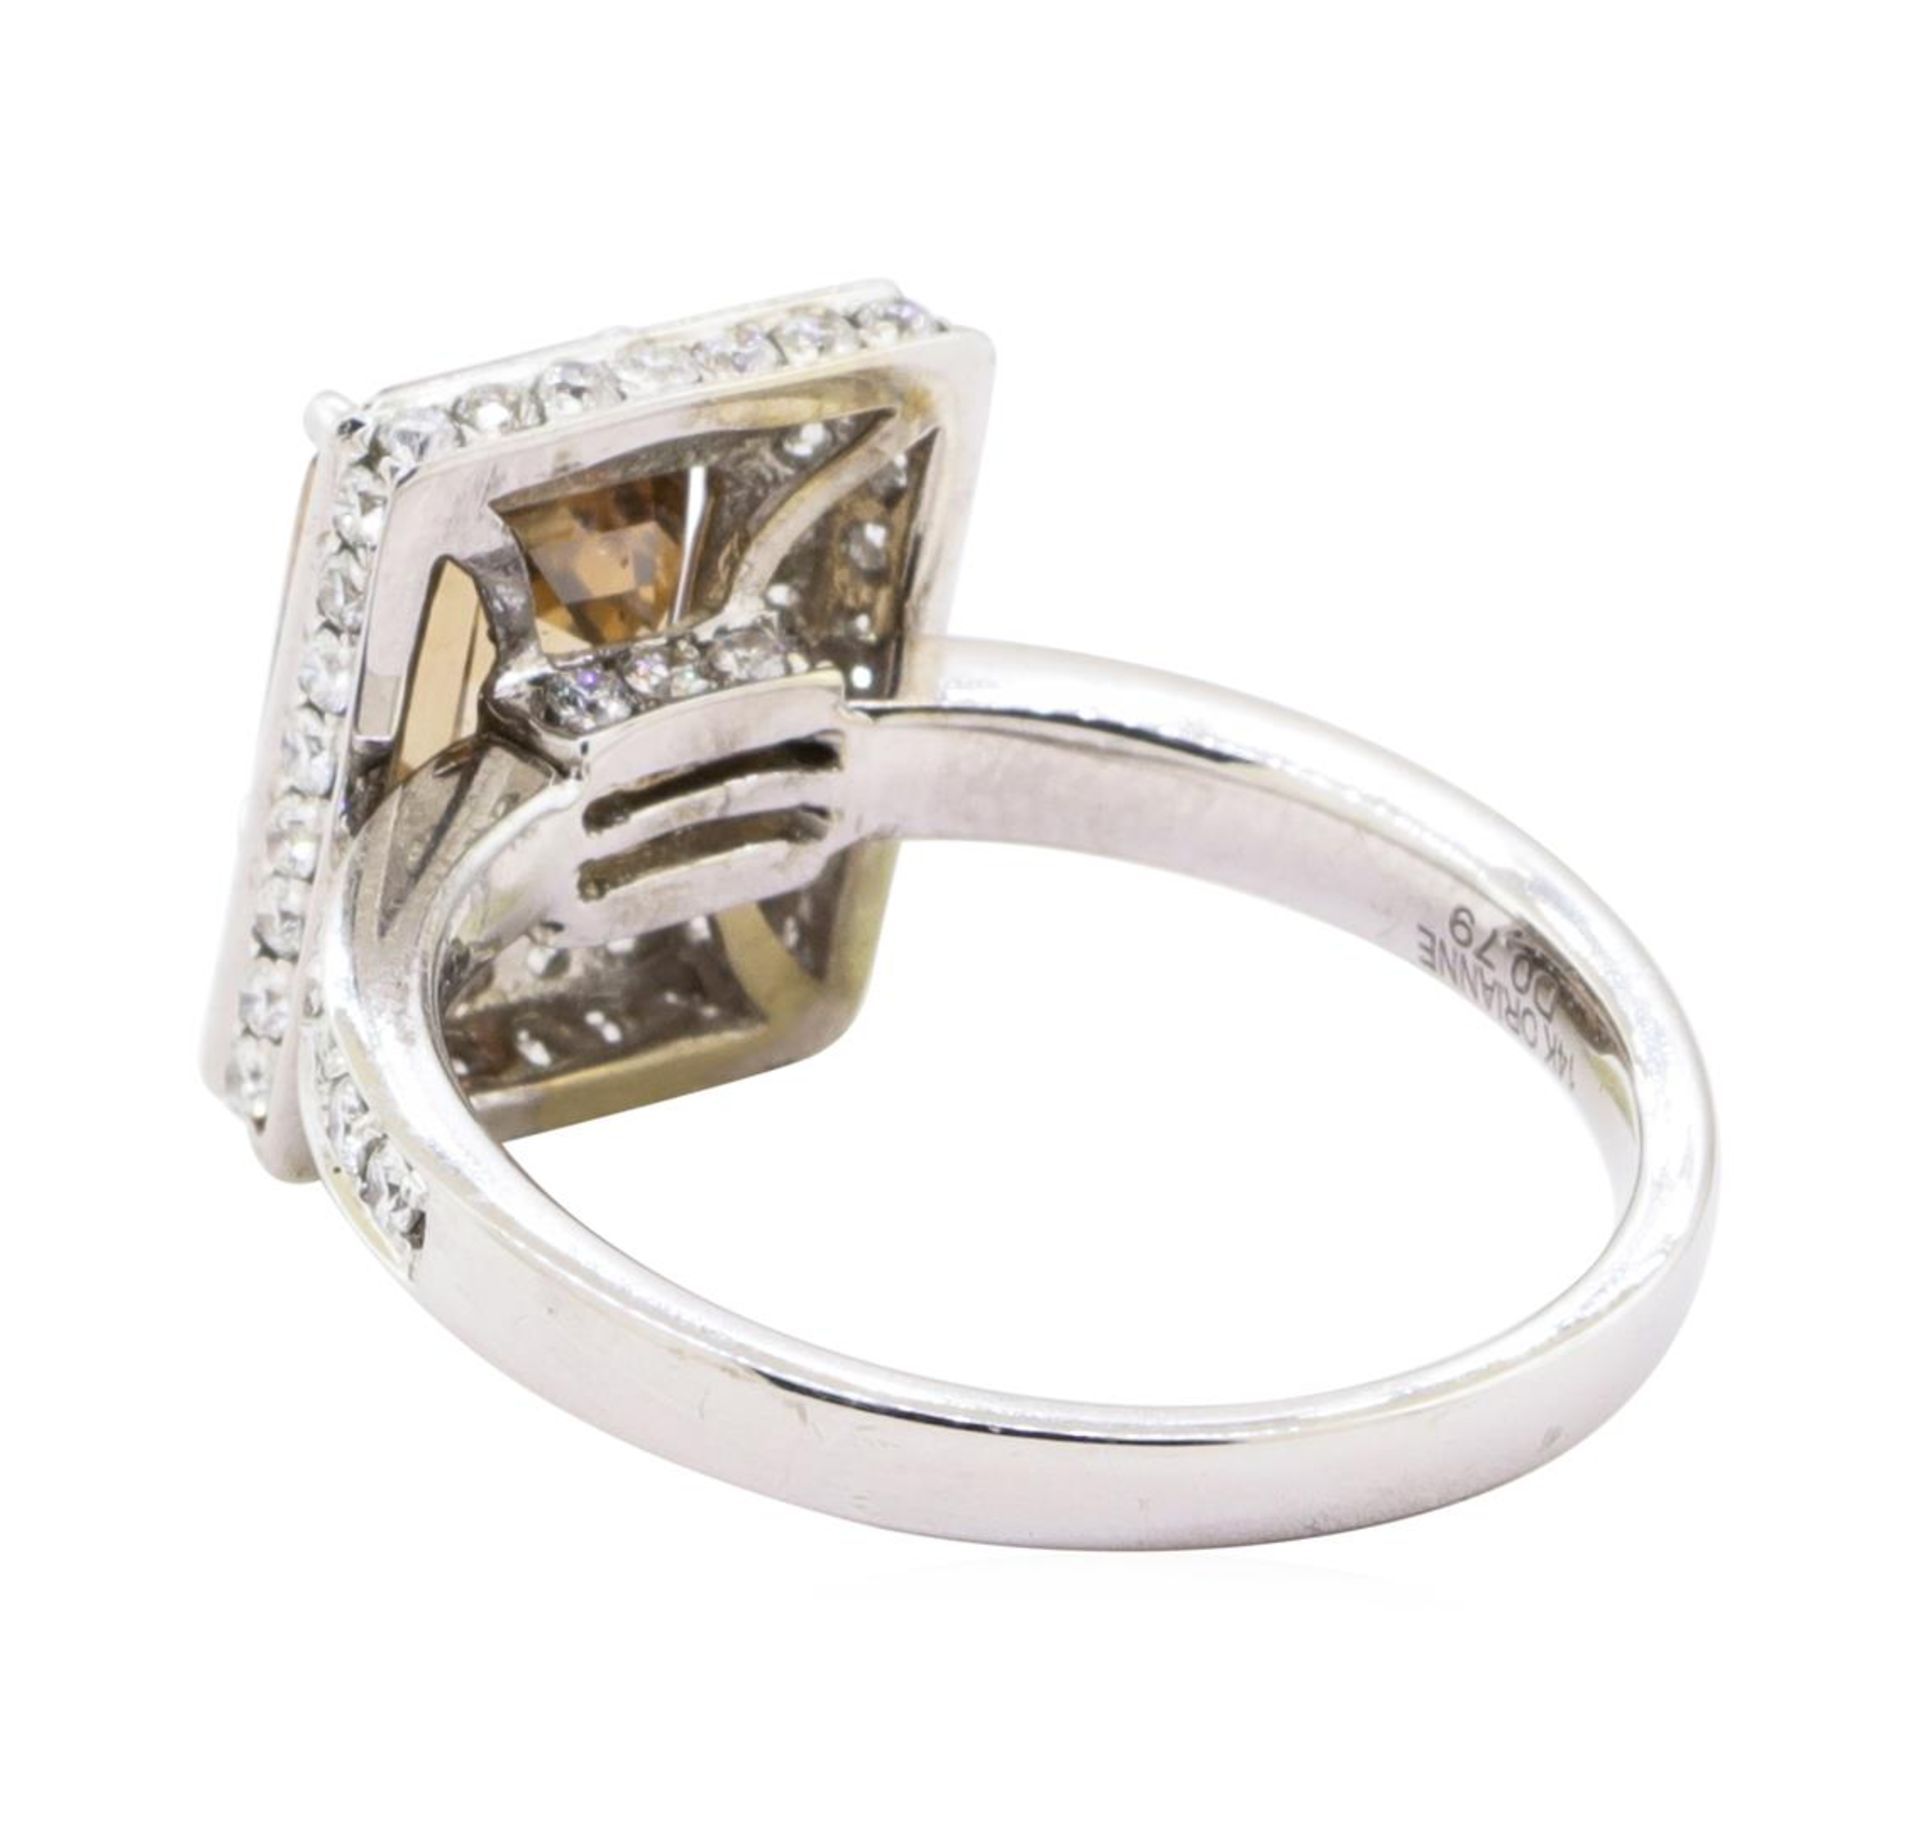 3.01 ctw Diamond Ring - 14KT White Gold - Image 3 of 4